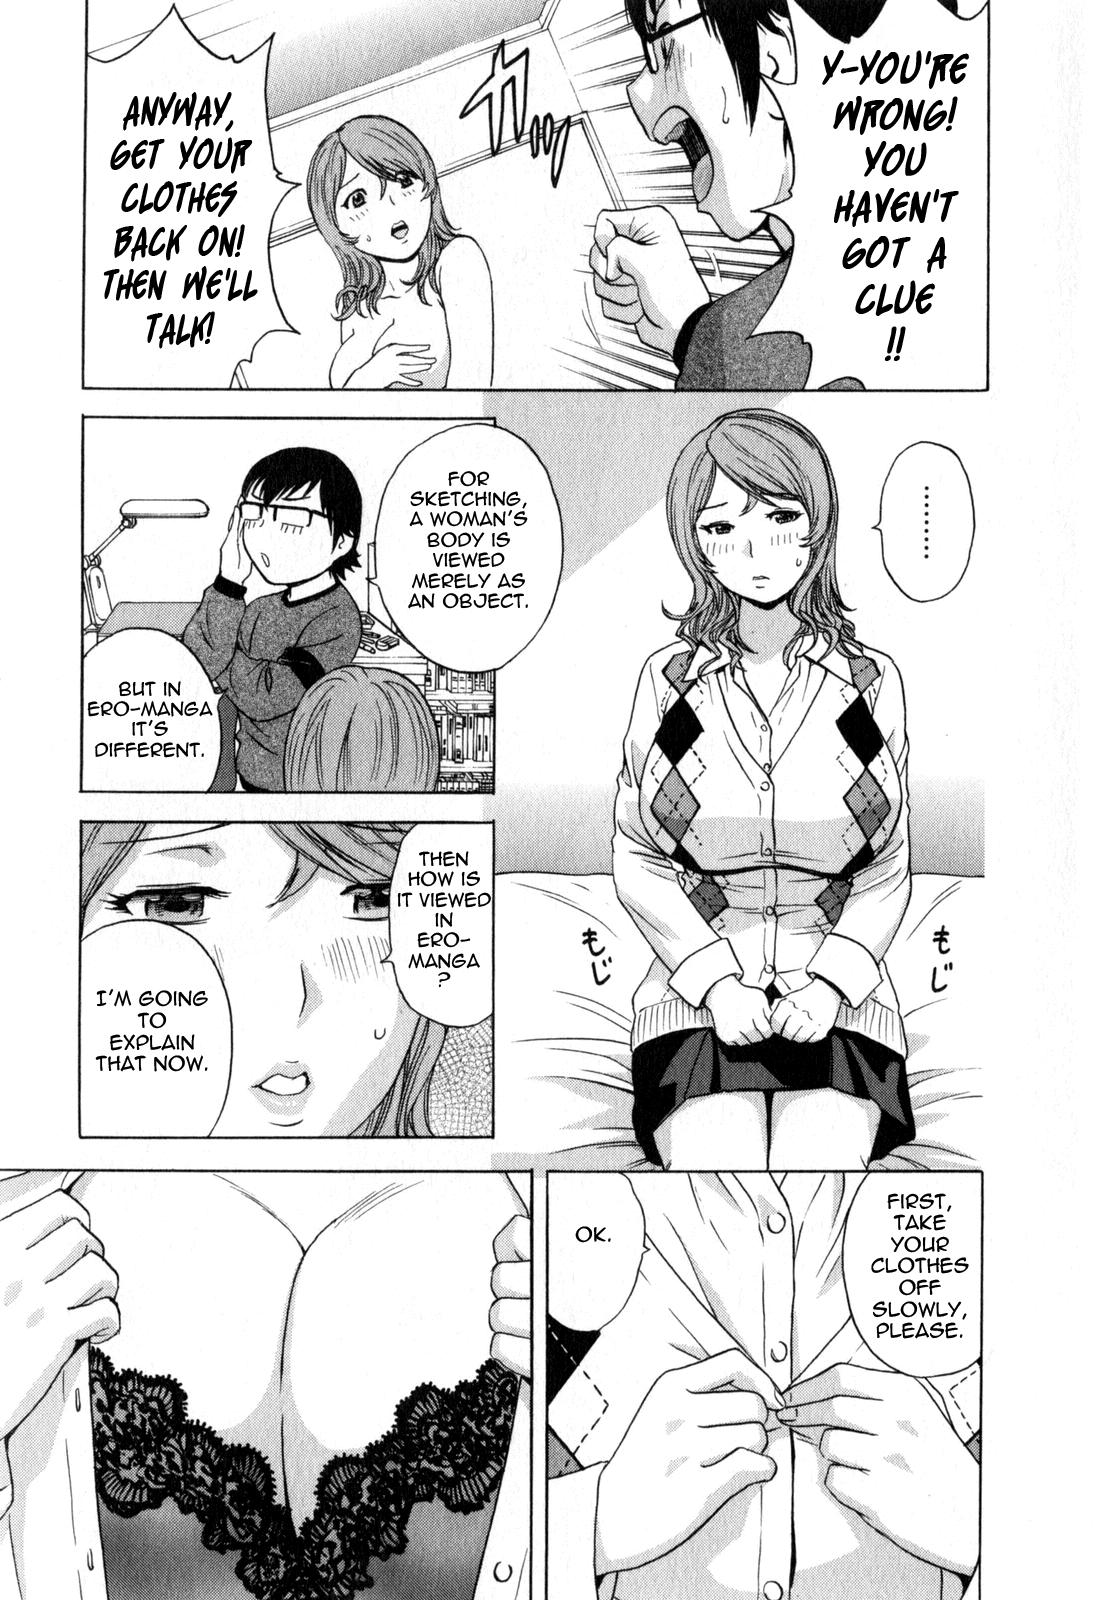 [Hidemaru] Life with Married Women Just Like a Manga 2 - Ch. 1-7 [English] {Tadanohito} 35